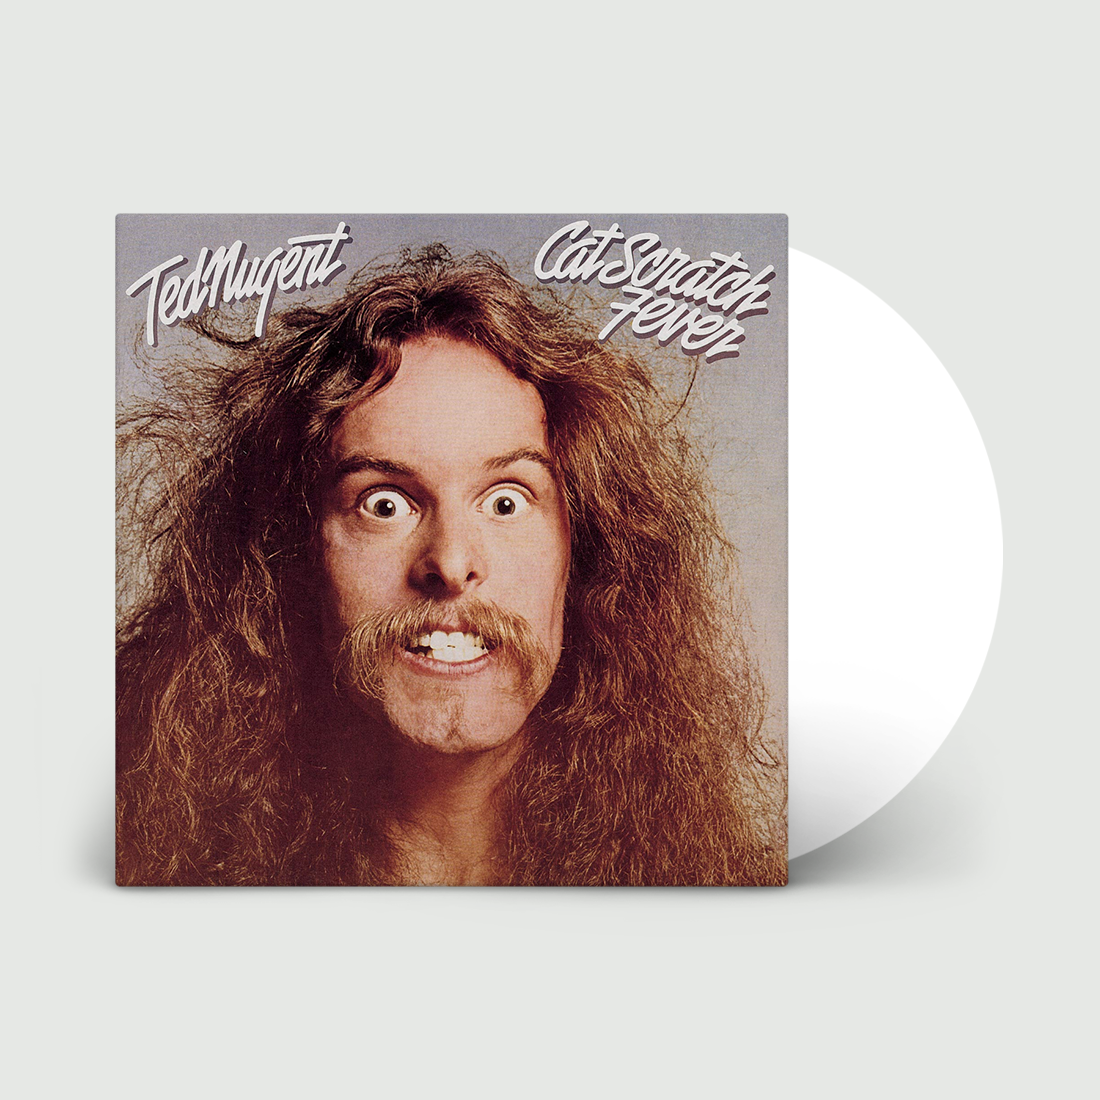 Cat Scratch Fever: Limited White Vinyl LP